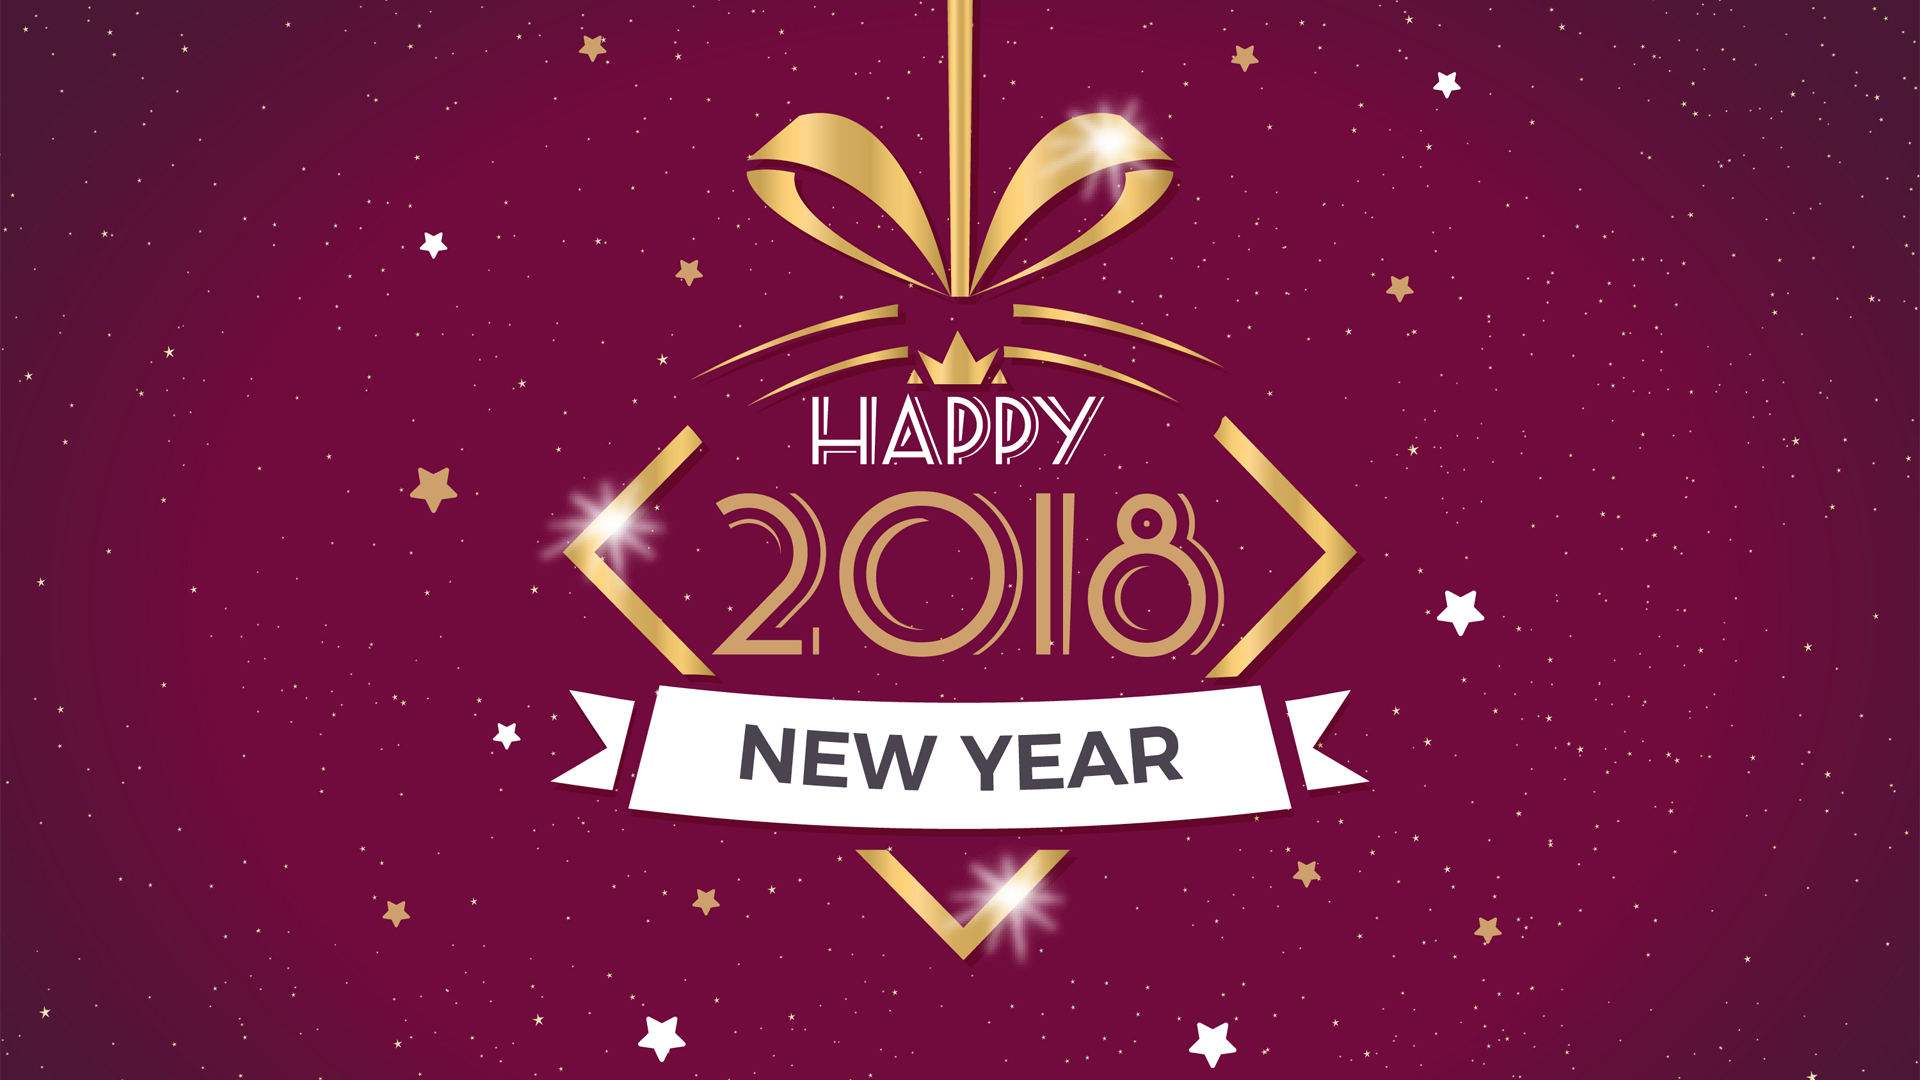 Beautiful HD Wallpaper of New Year 2018 HD Wallpapers 1920x1080